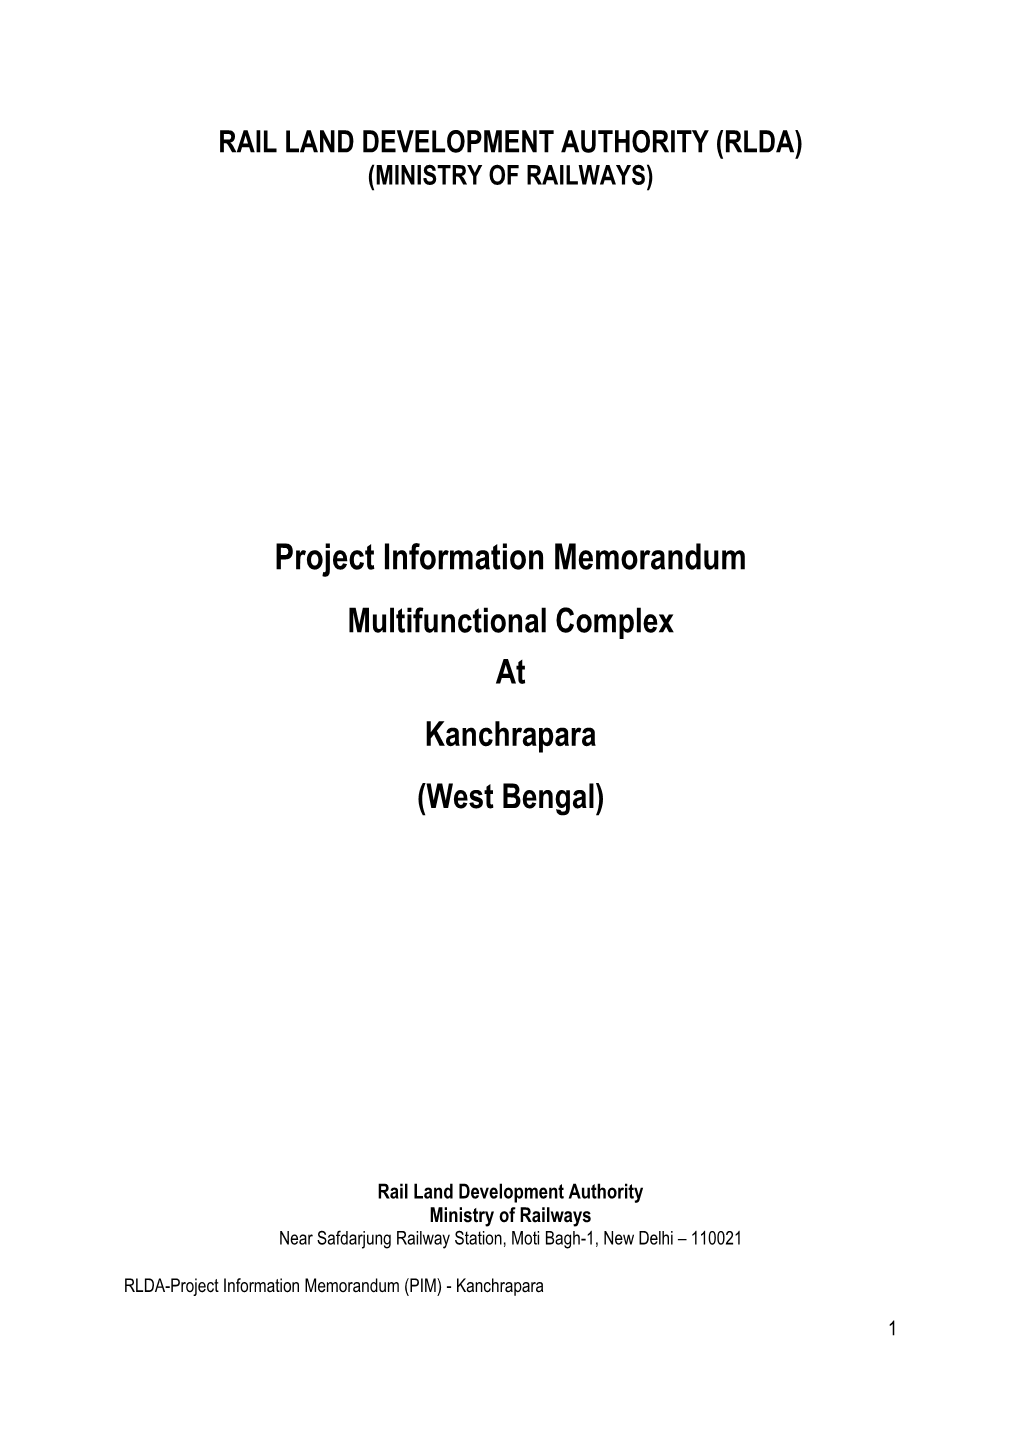 Project Information Memorandum Multifunctional Complex at Kanchrapara (West Bengal)